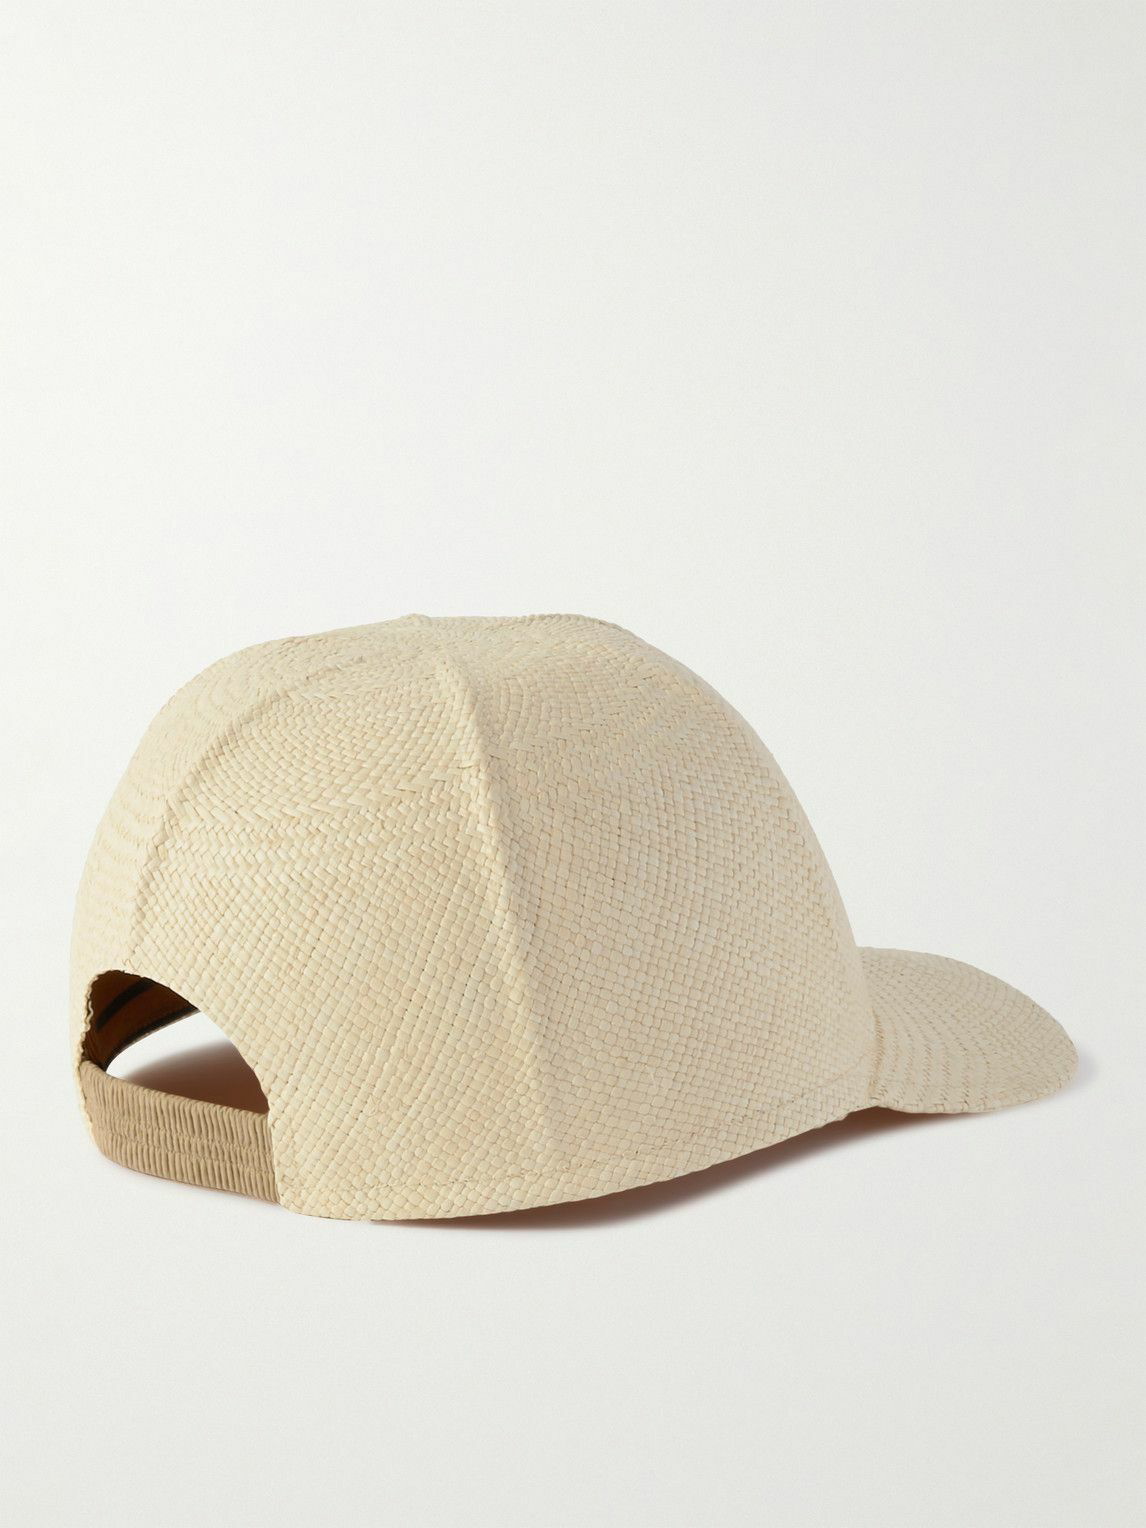 Zegna - Logo-Embellished Leather-Trimmed Straw Hat - White Zegna